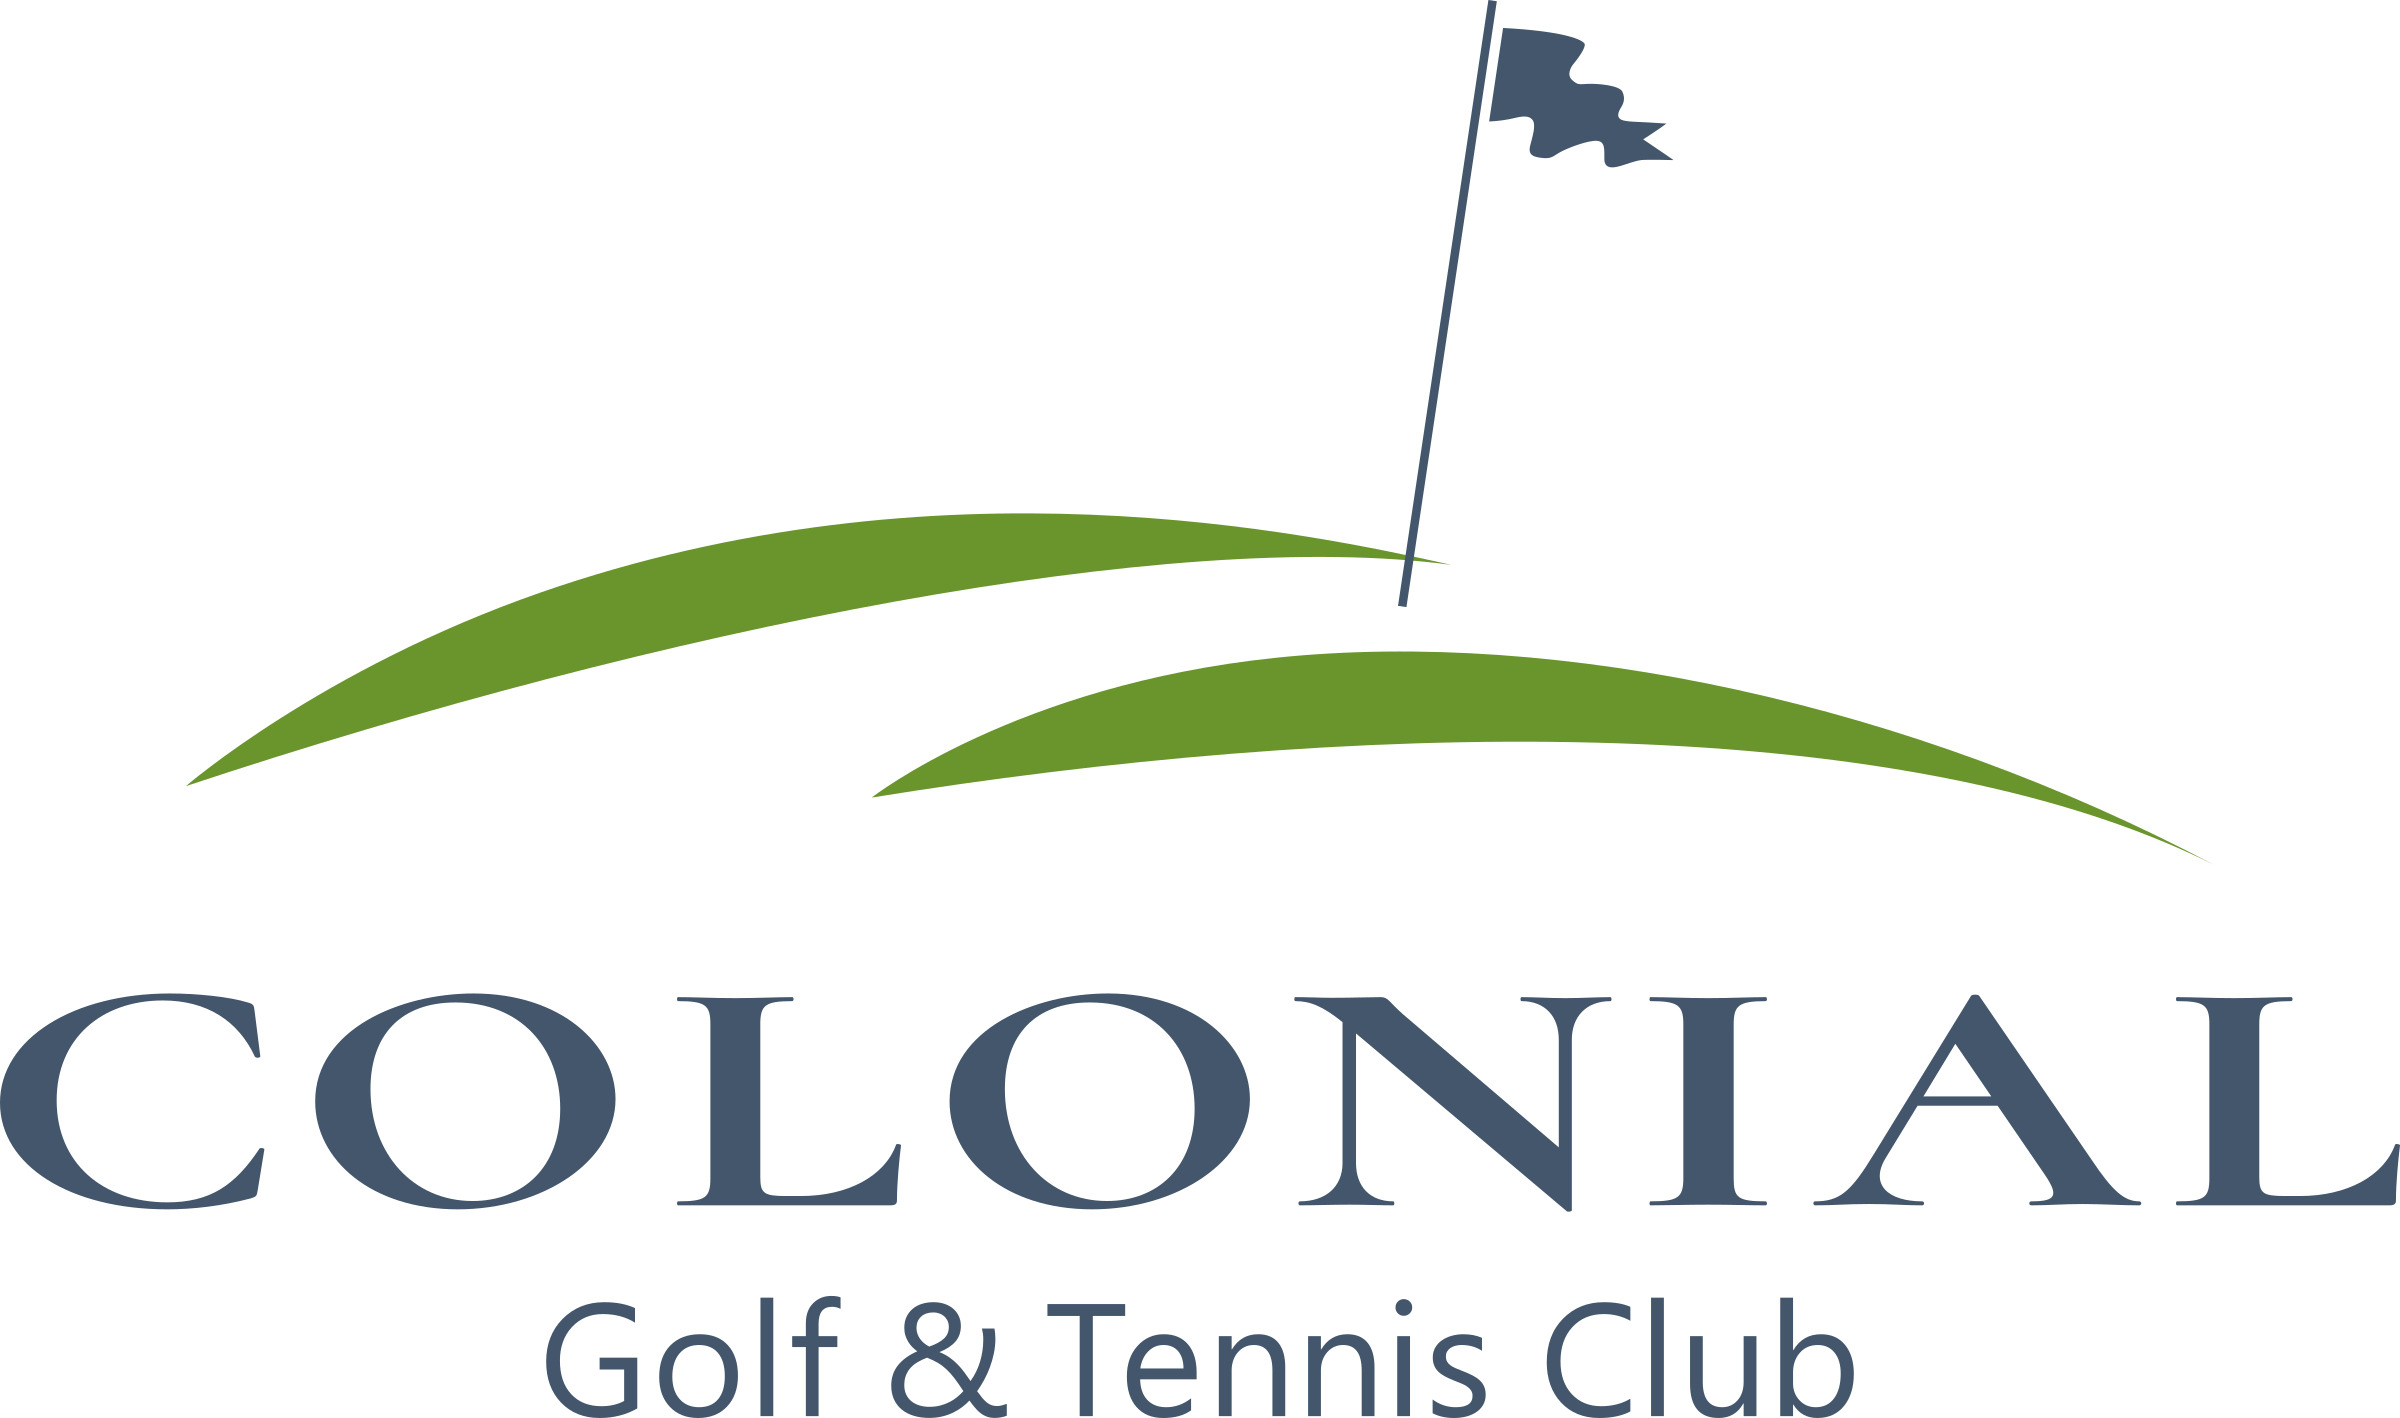 Colonial Golf & Tennis Club